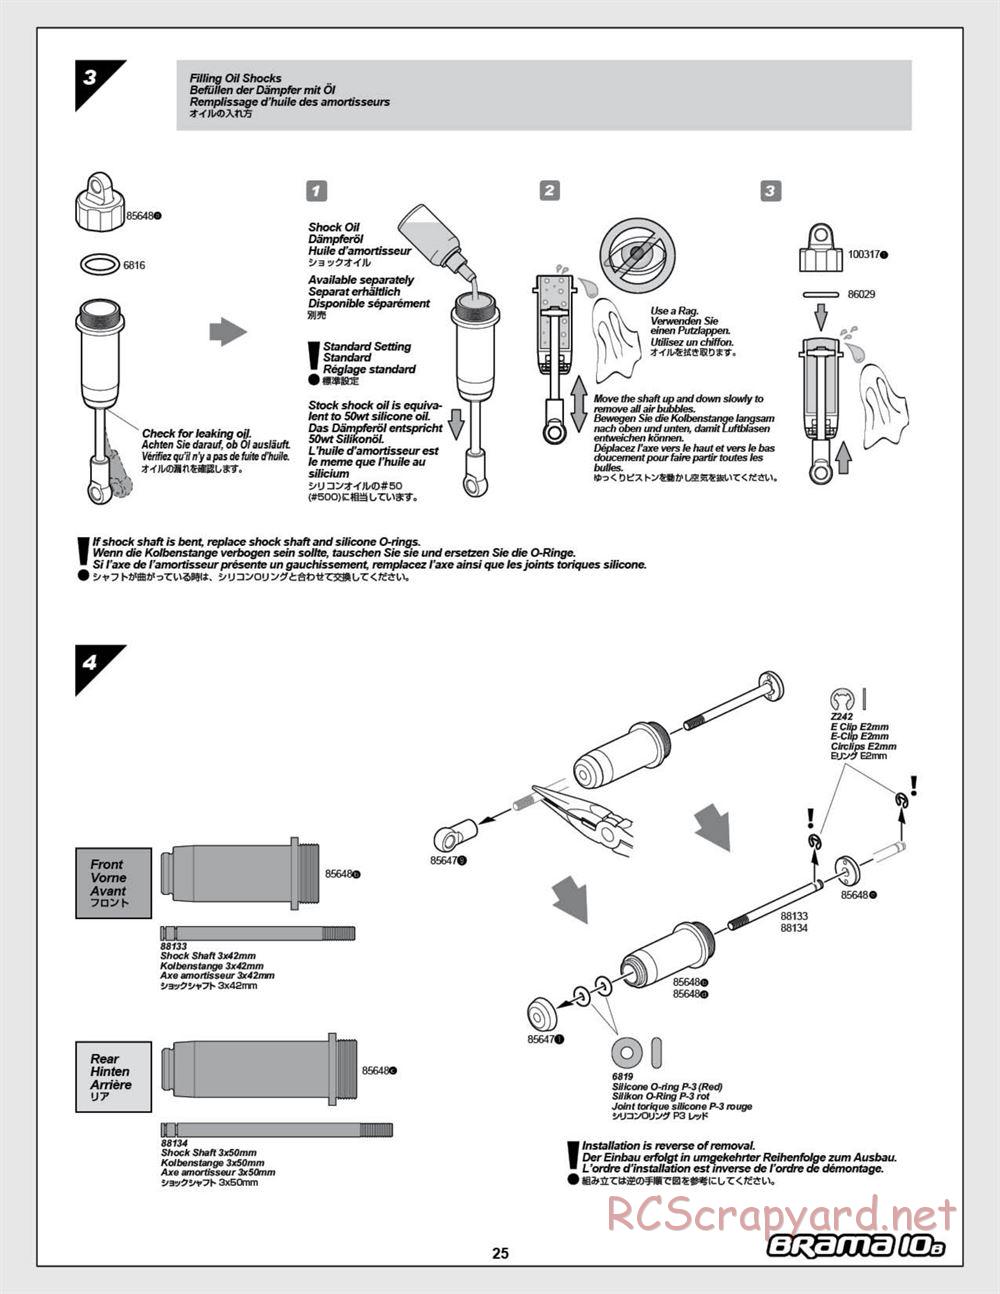 HPI - Brama 10B - Manual - Page 25